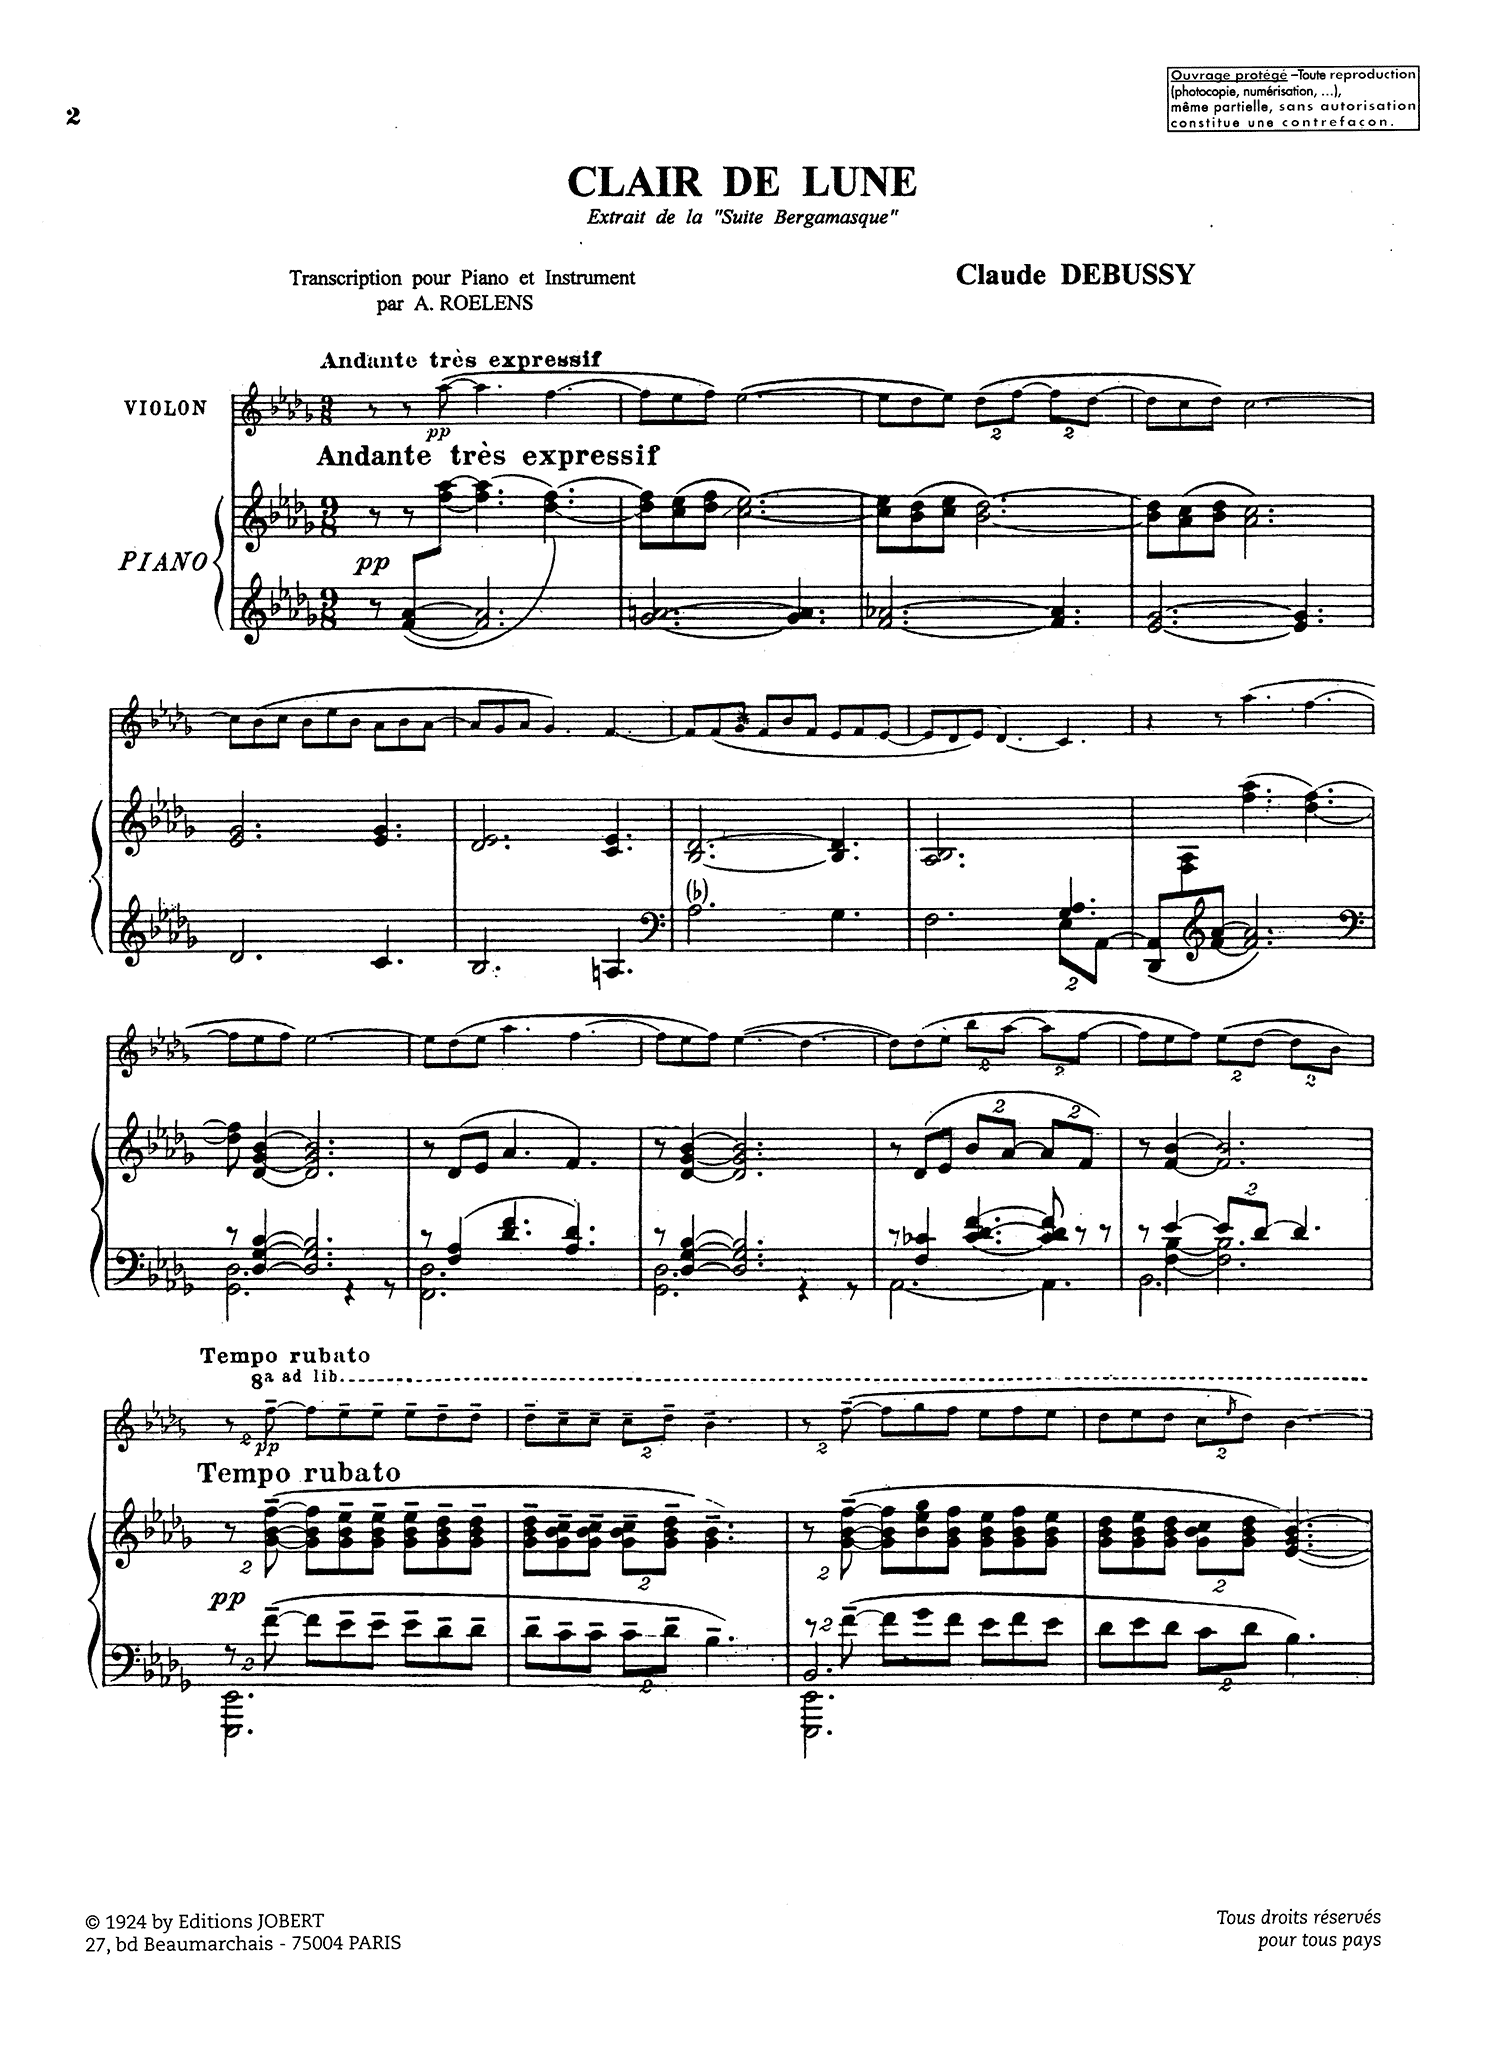 Debussy Clair de lune, from Suite bergamasque clarinet and piano arrangement score